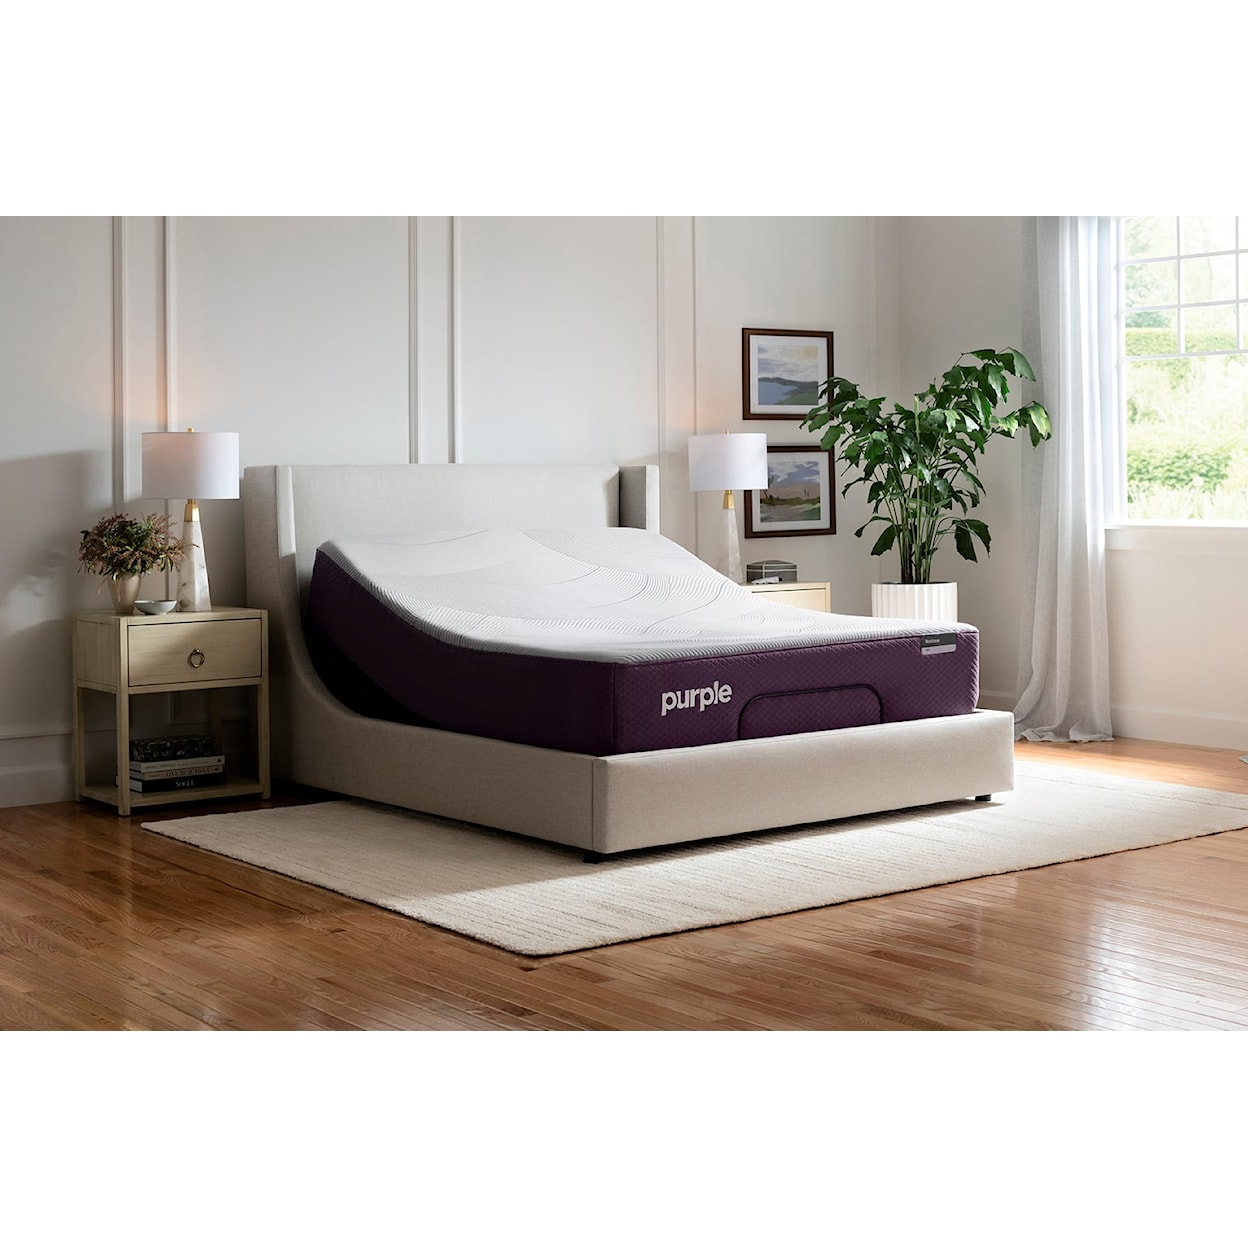 Purple Restore Soft Restore Queen Mattress plus Smart+ Base